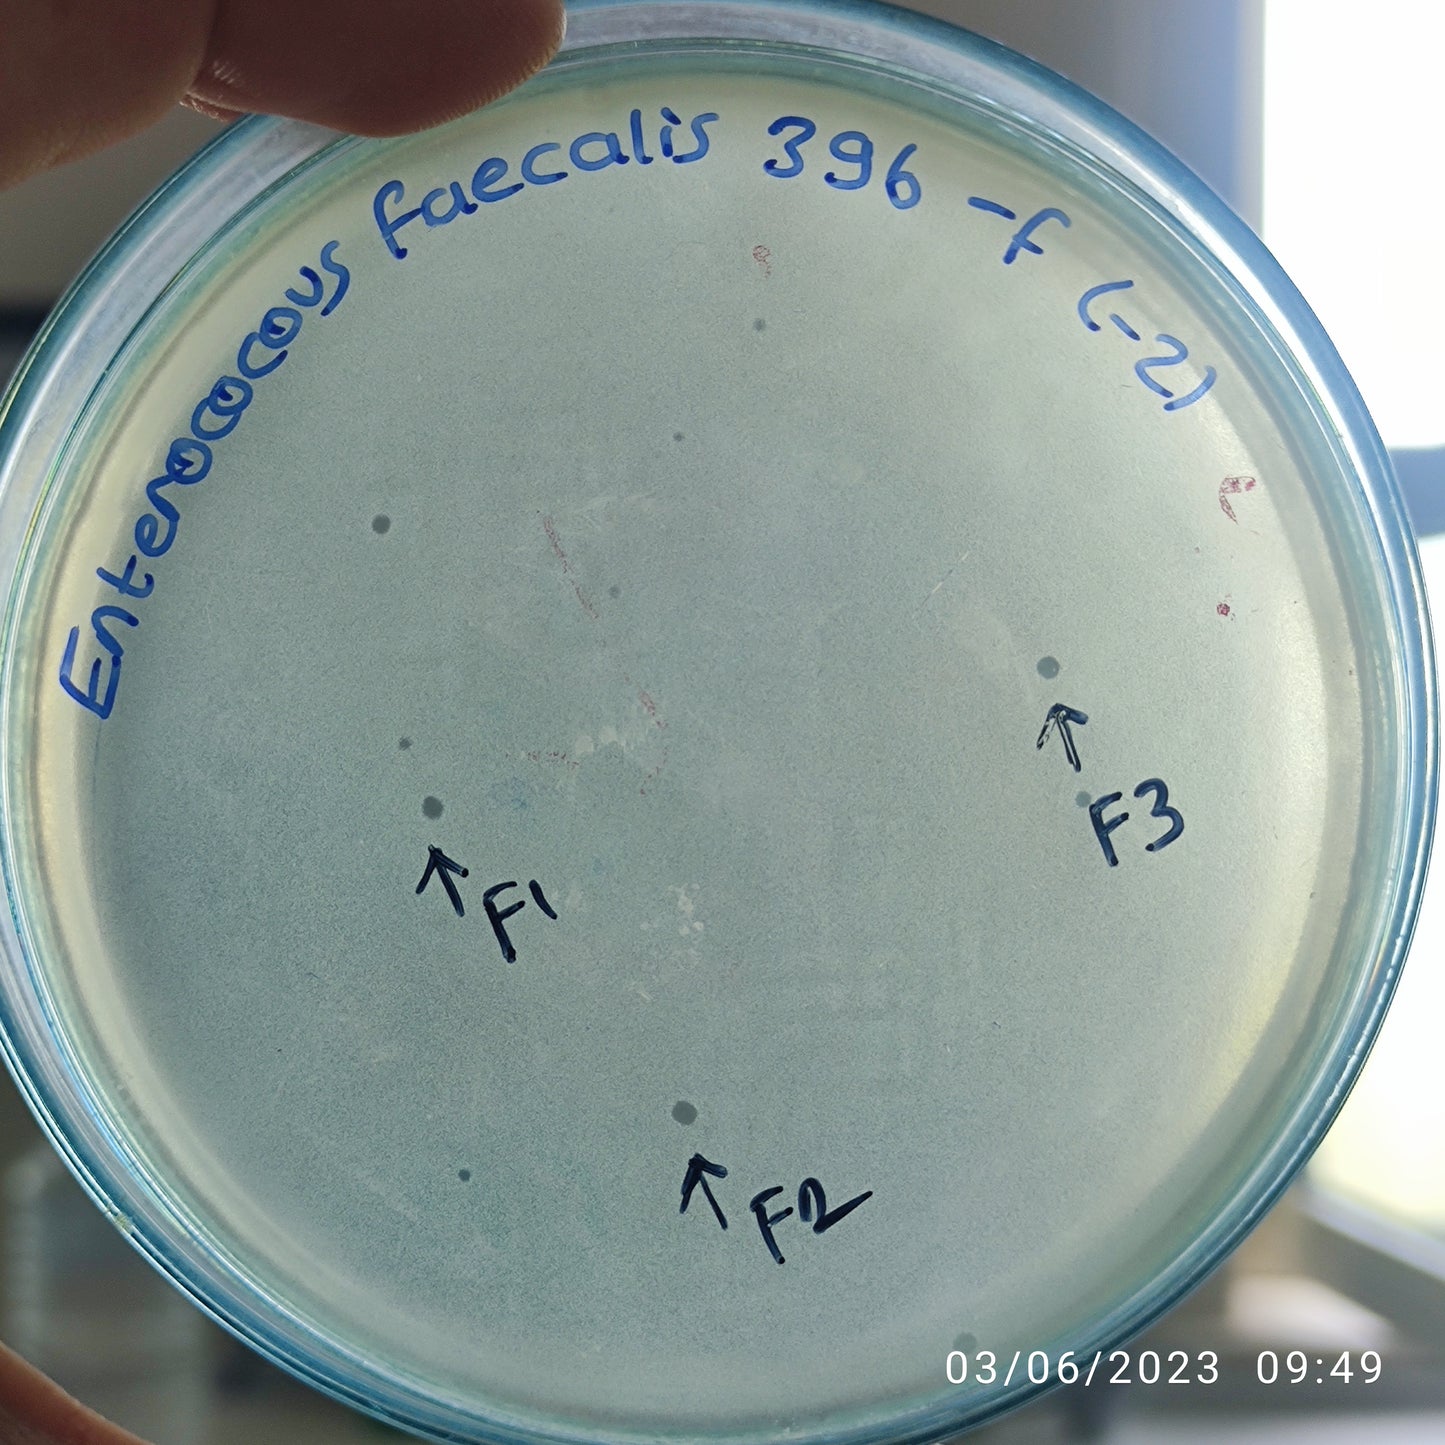 Enterococcus faecalis bacteriophage 110396F